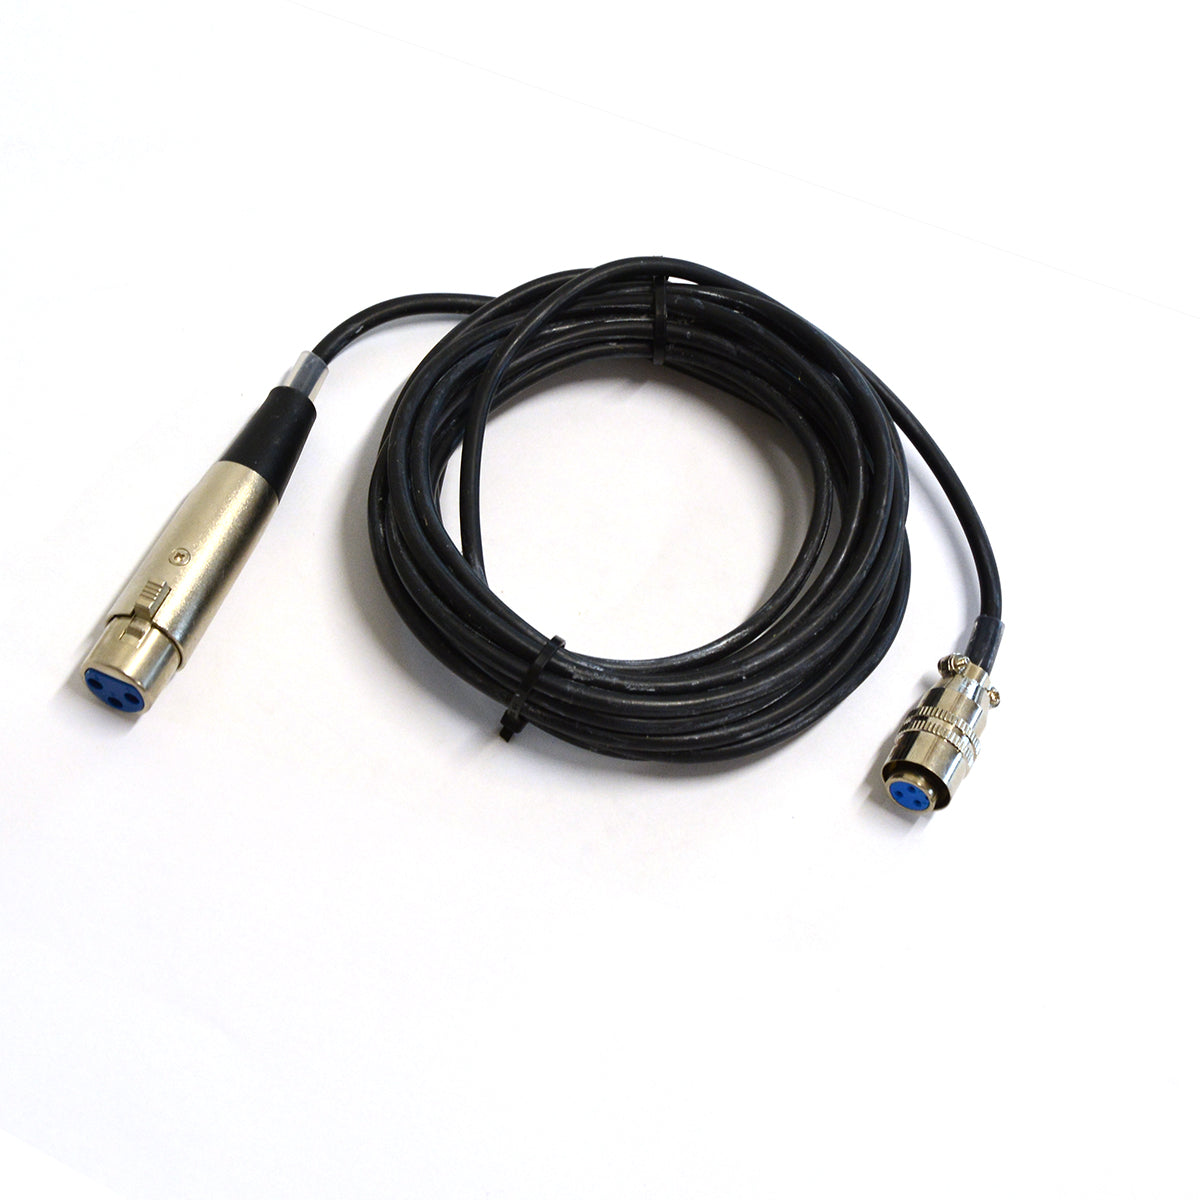 RTD sensor Cable, XLR to QD, Silicon Cable 3m Black